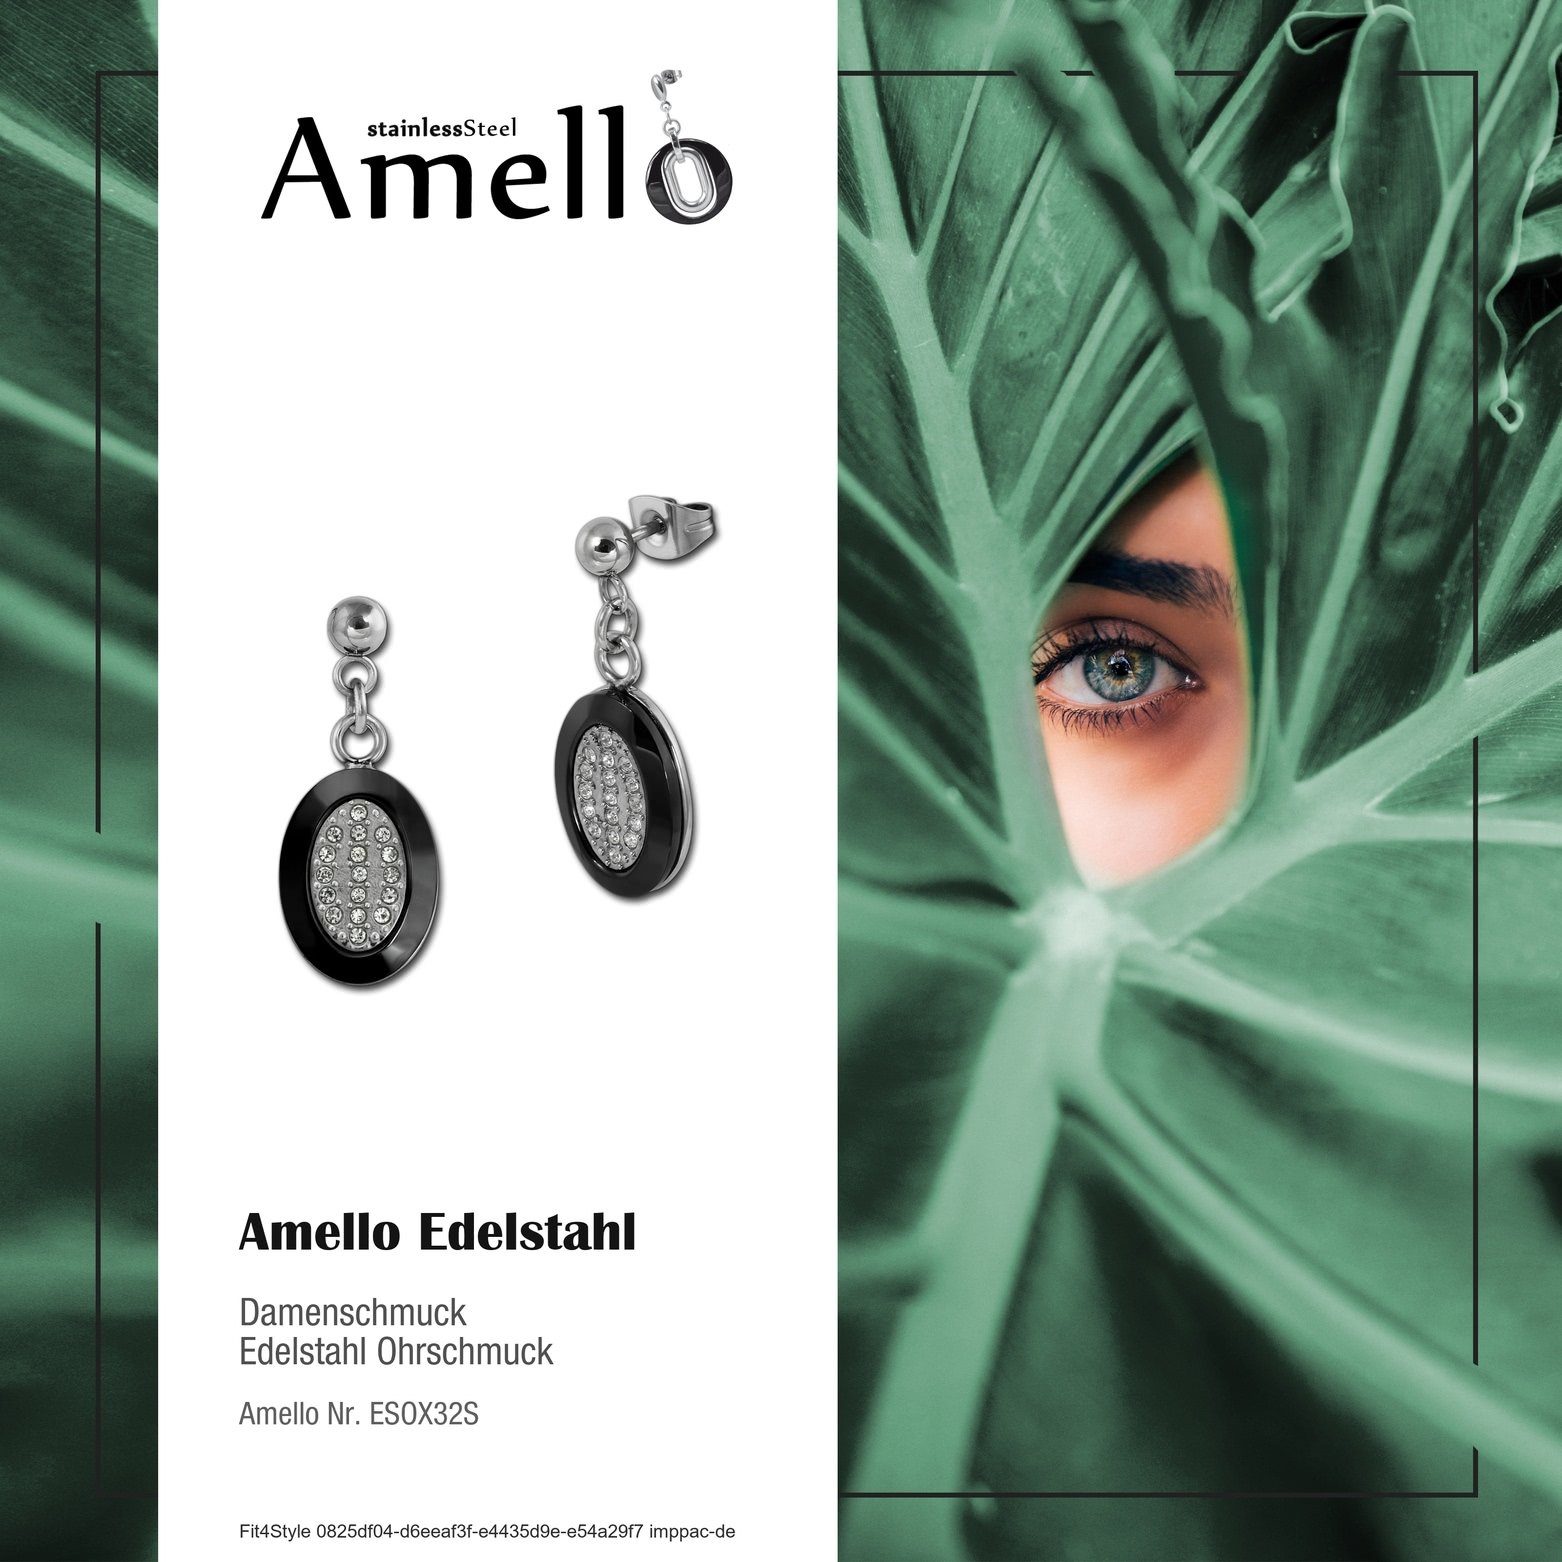 Ohrringe in Ohrhänger Edelstahl silberfarben, Steel), oval Paar Amello Amello Keramik Edelstahl sch (Ohrhänger), Ohrhänger (Stainless Damen